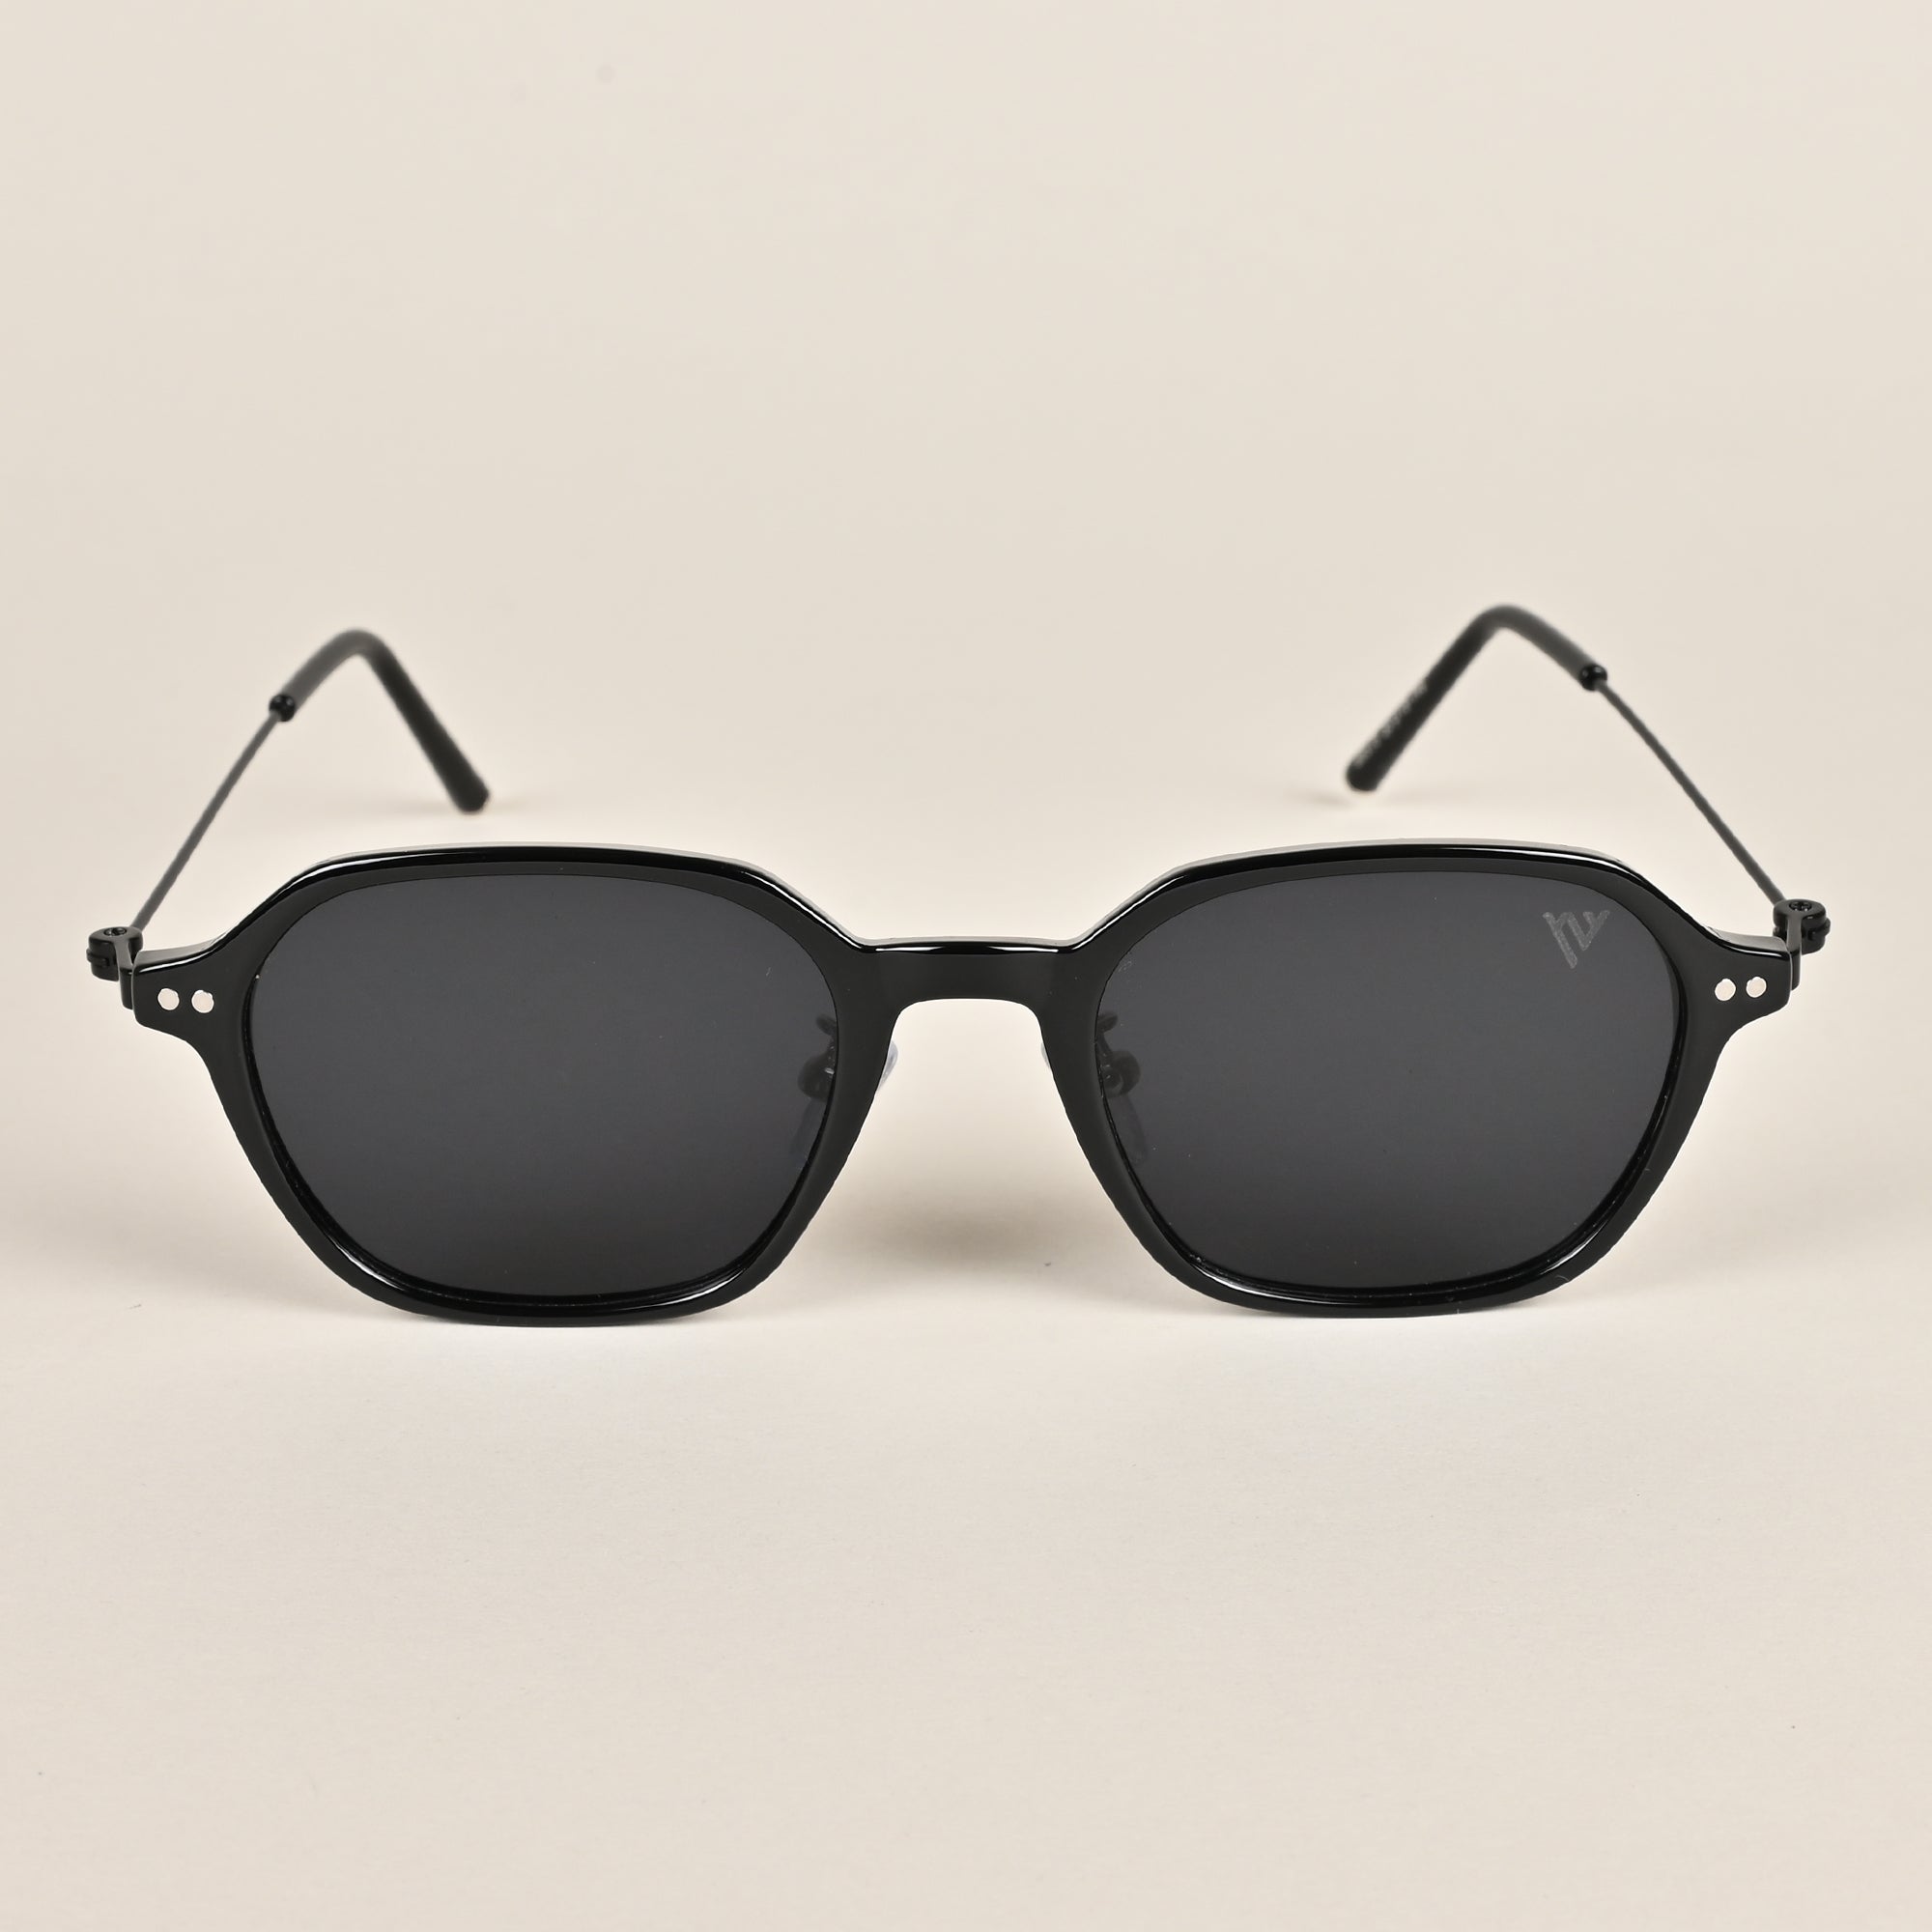 Voyage Black Oval Sunglasses - MG3888